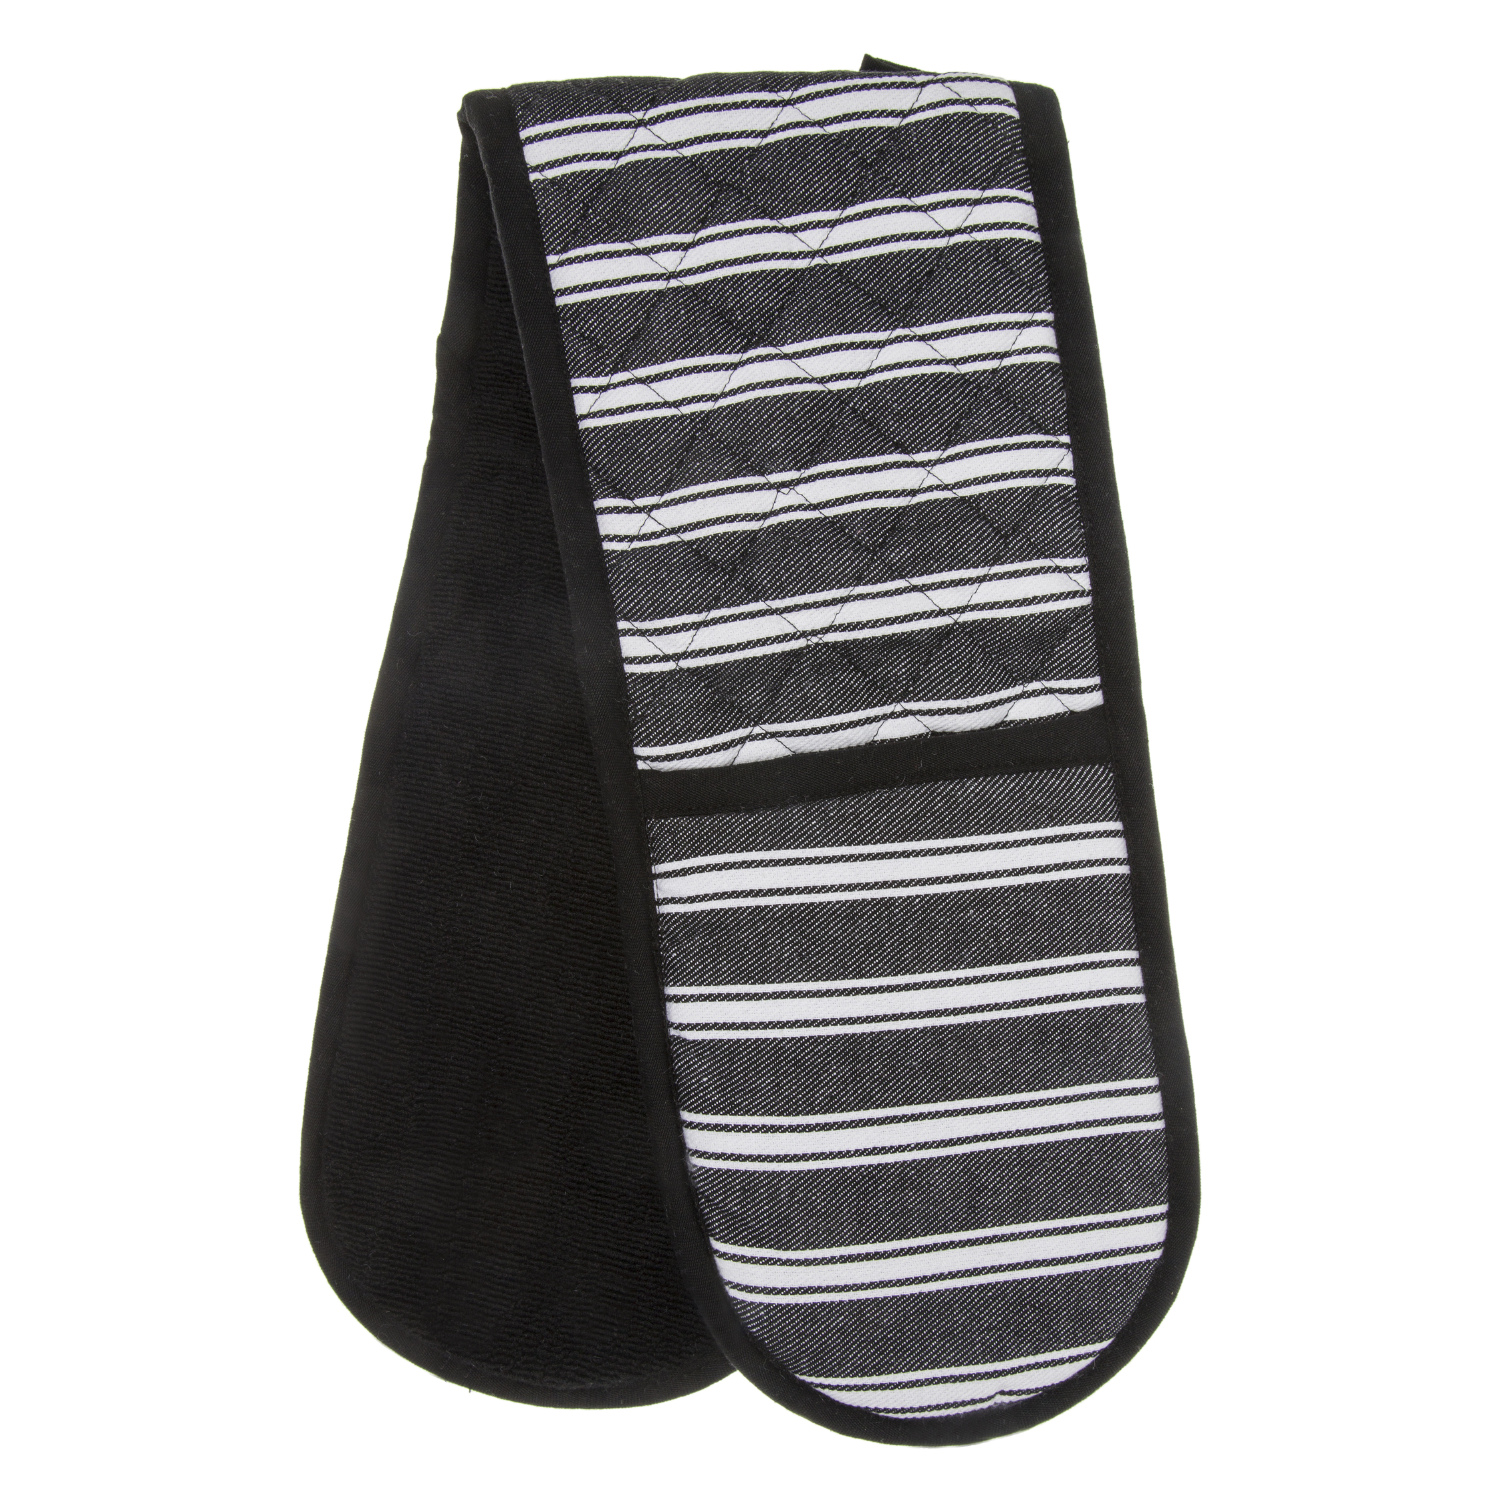 Luxury Stripes Double Oven Glove - Black Image